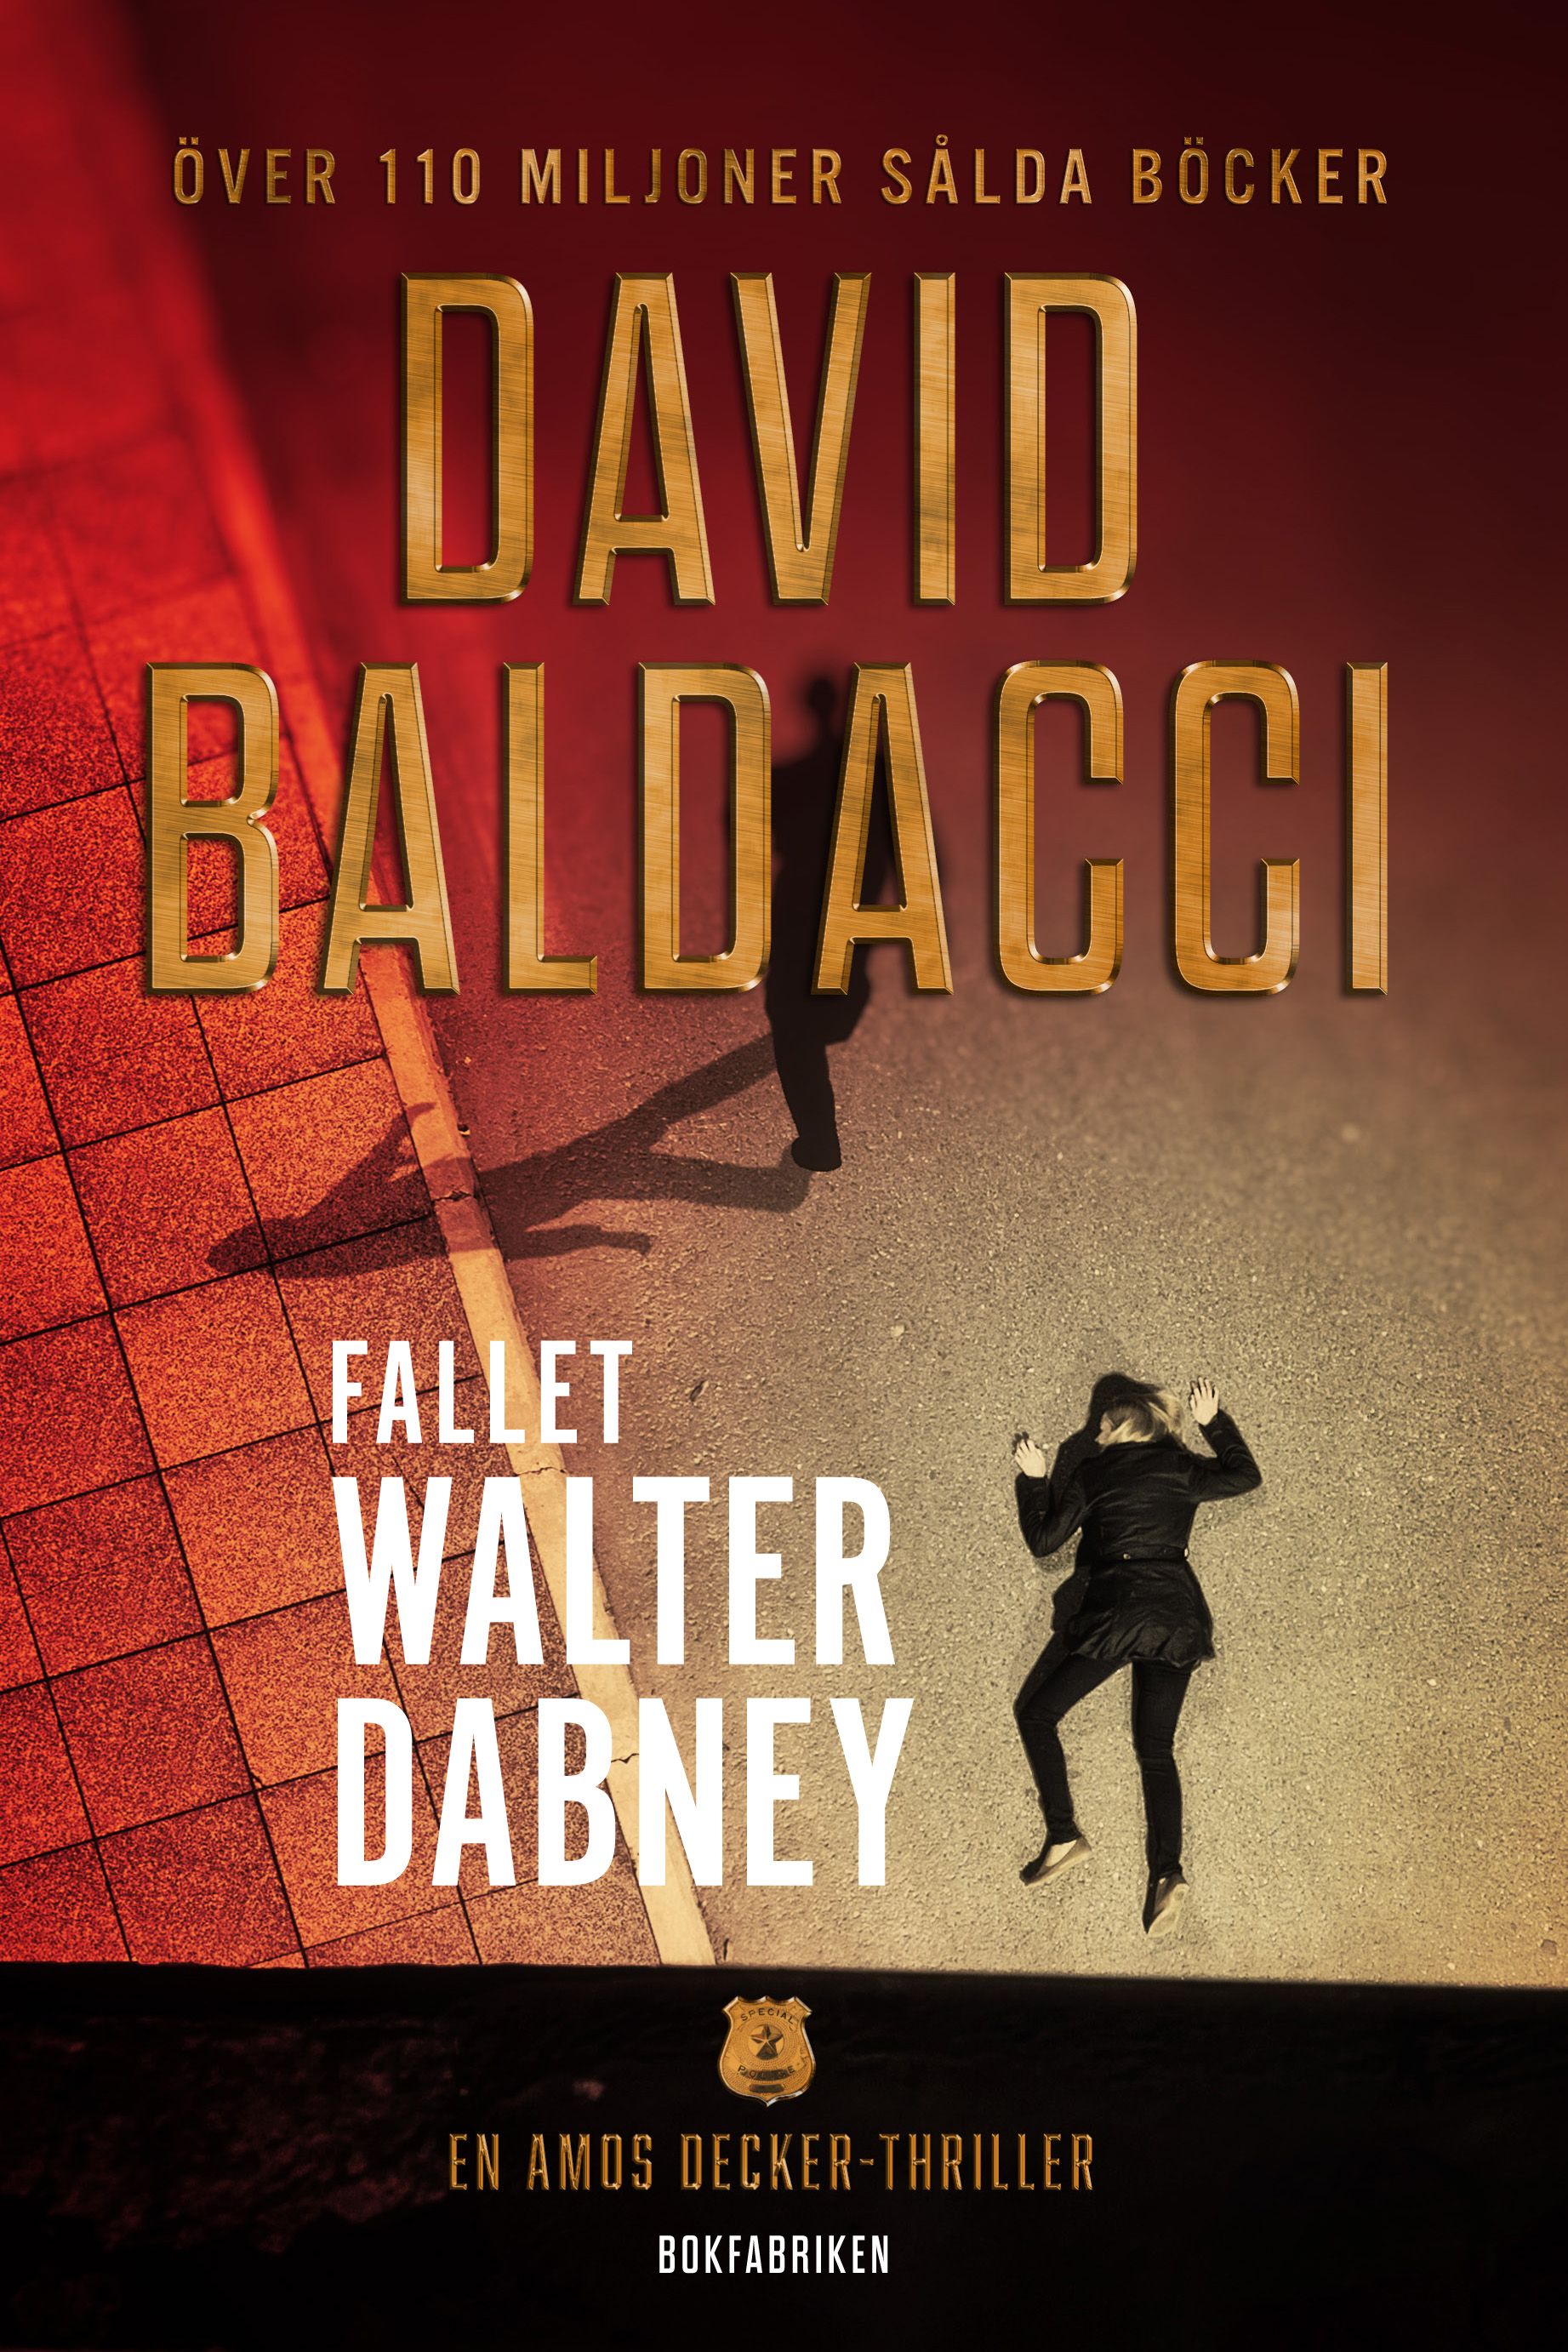 Fallet Walter Dabney, e-bok av David Baldacci